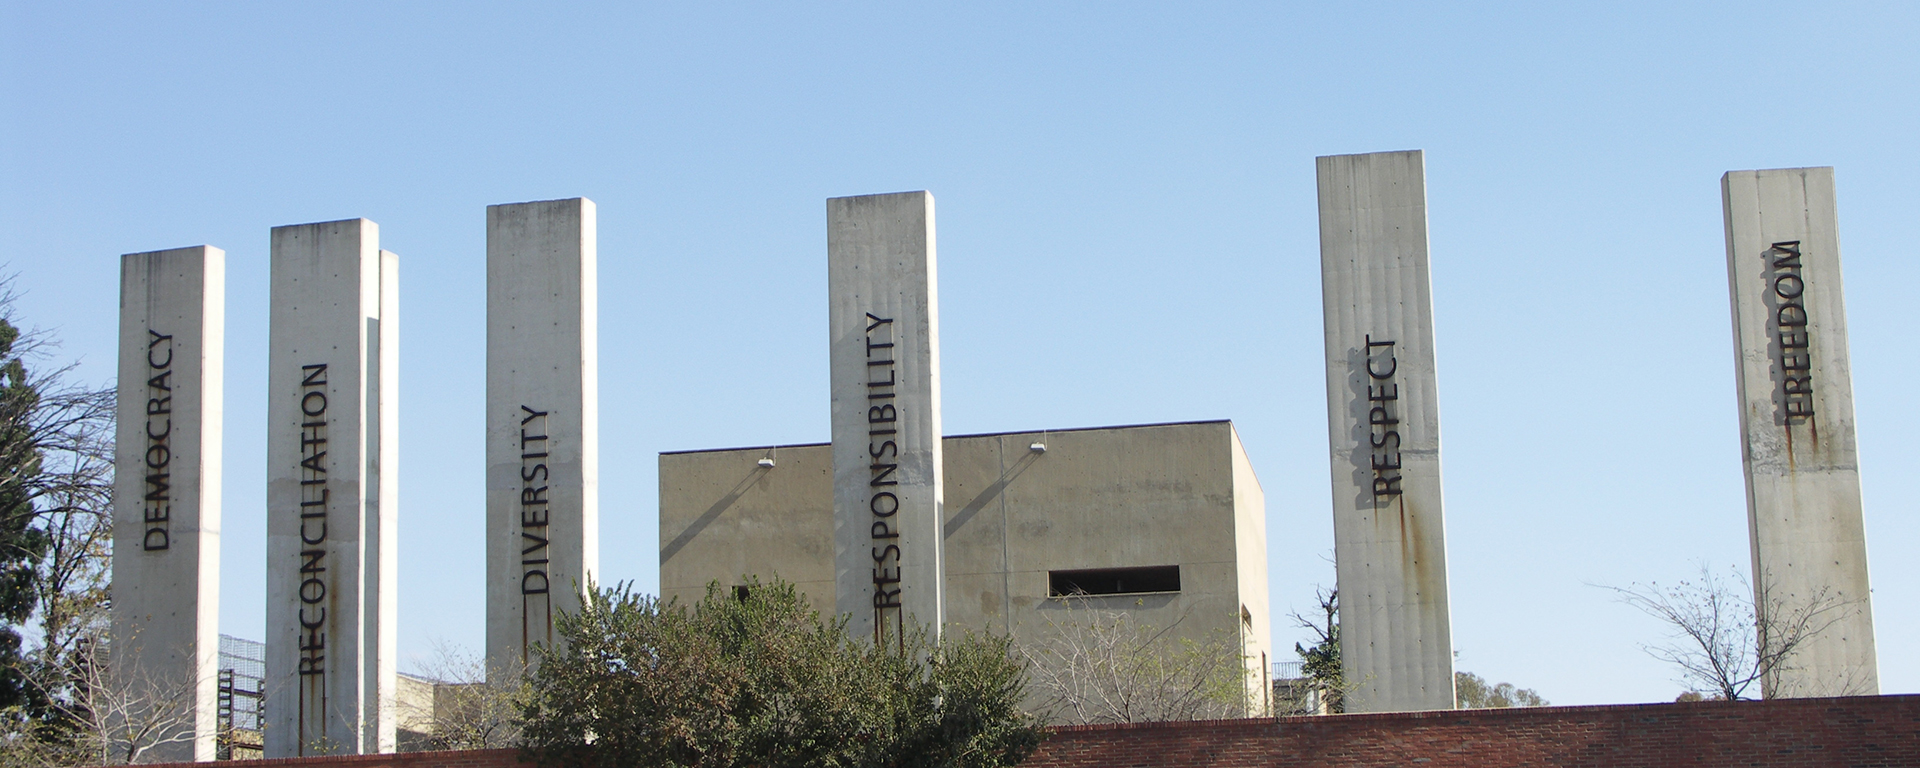 south_africa-johannesburg-apartheid_museum001